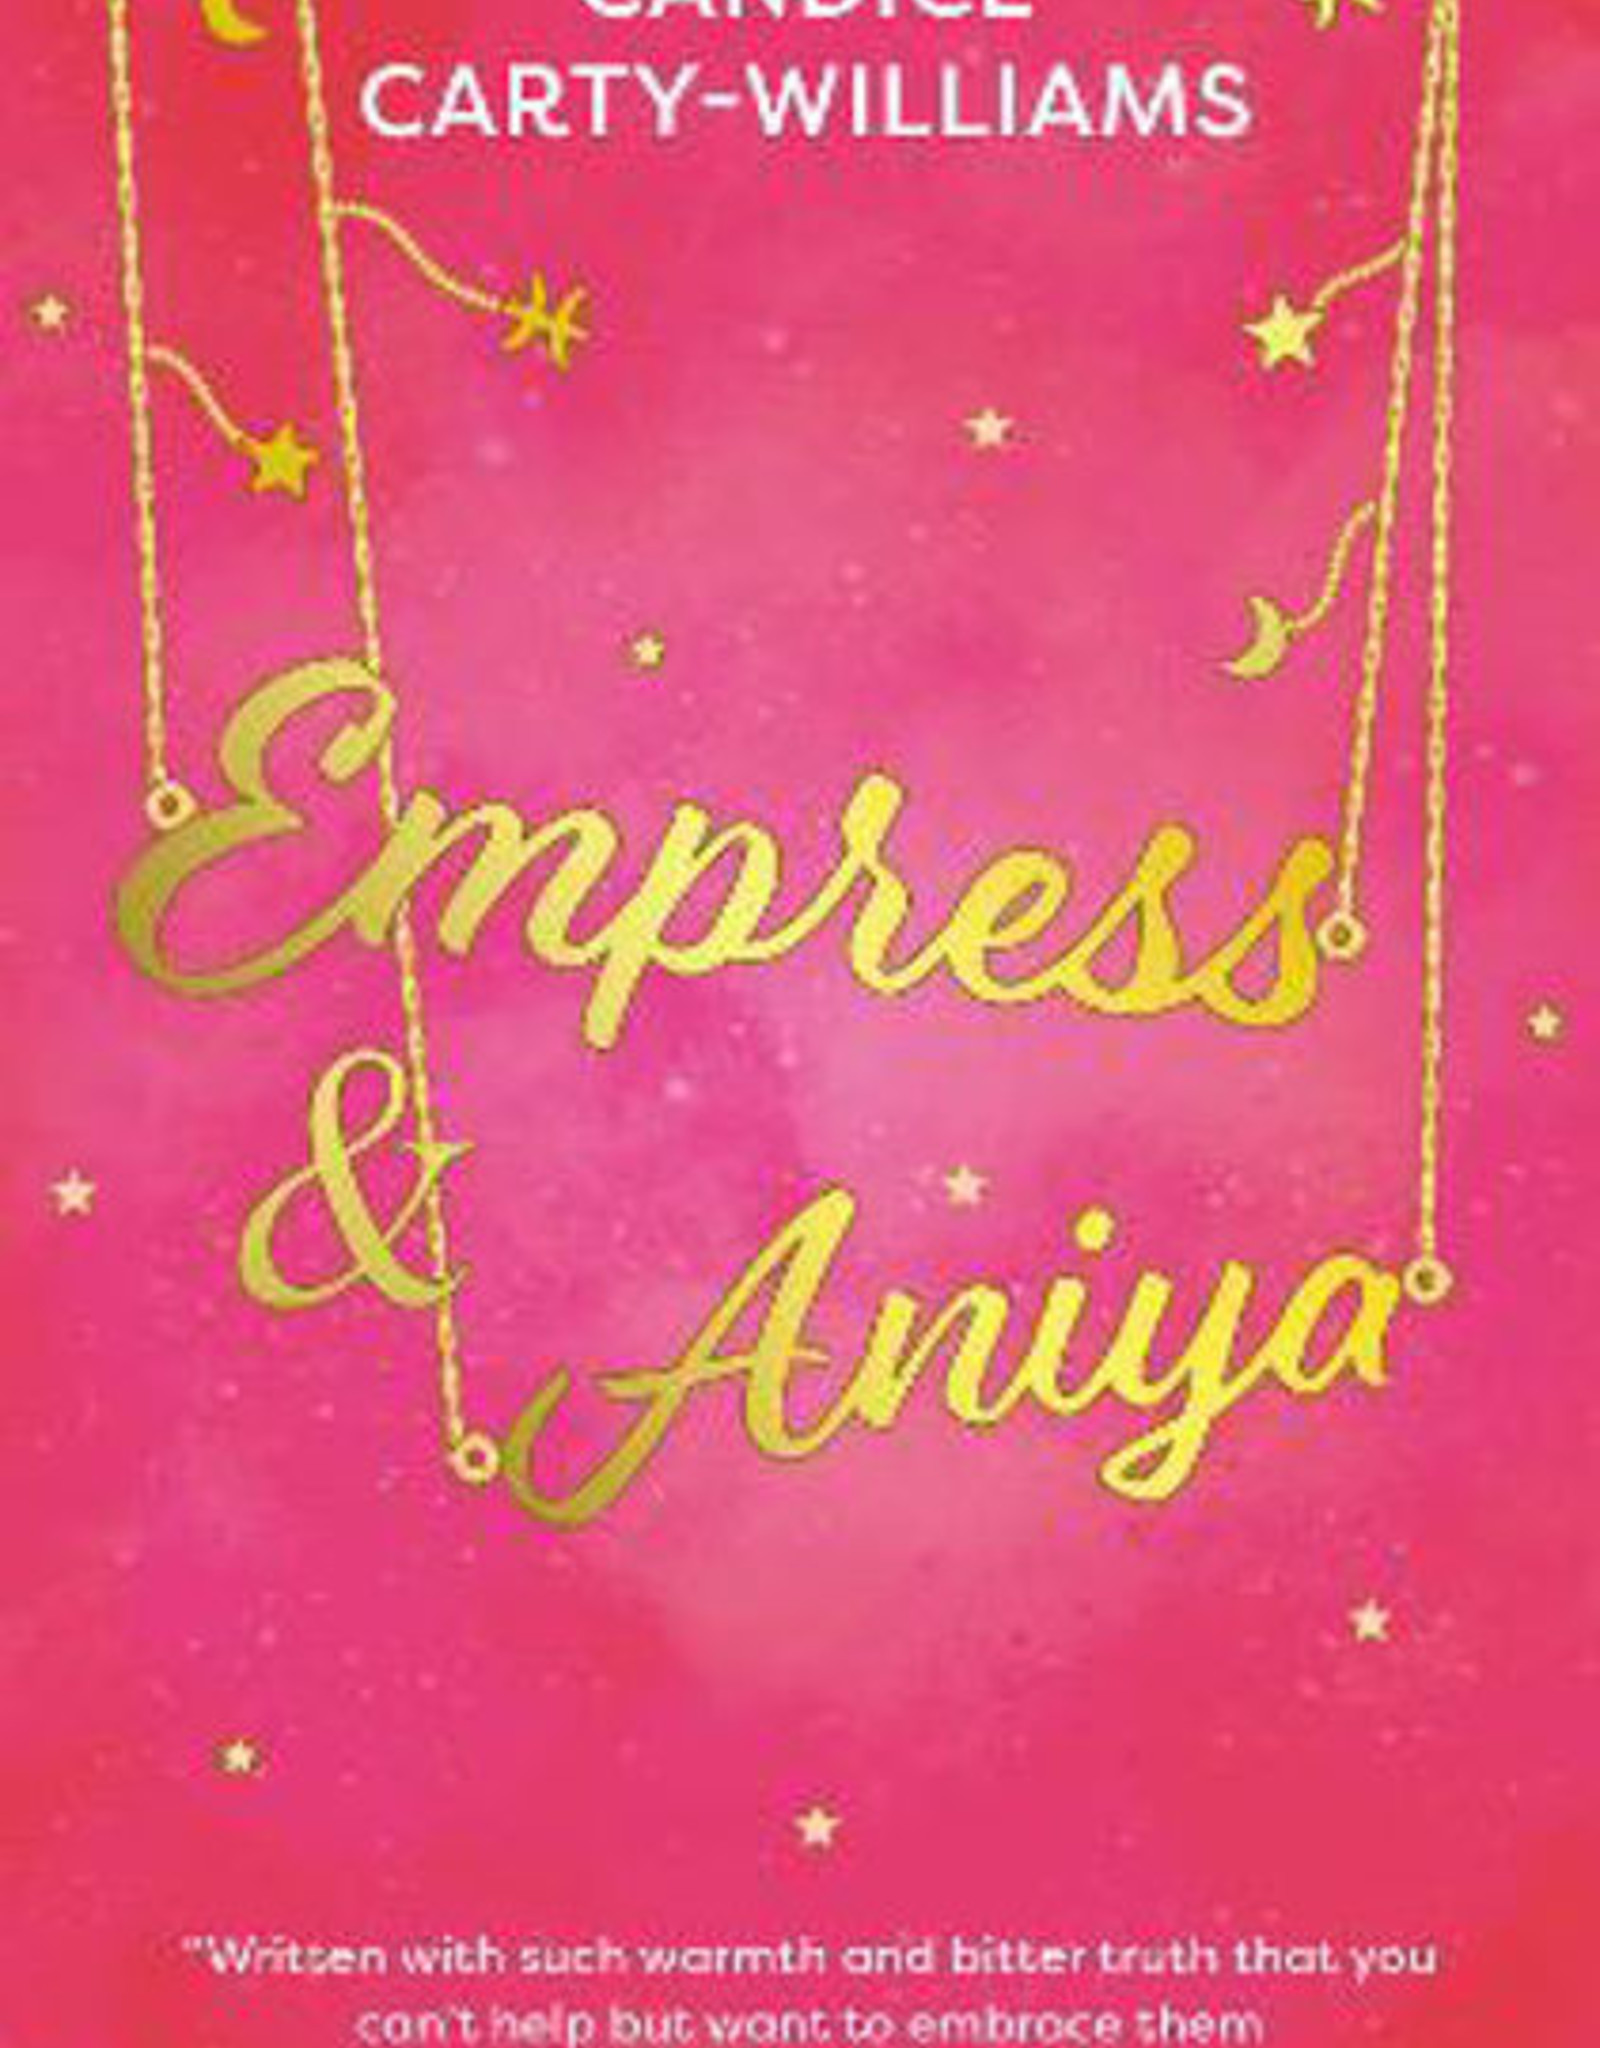 Knights Of Empress & Aniya by Candice Carty-Williams